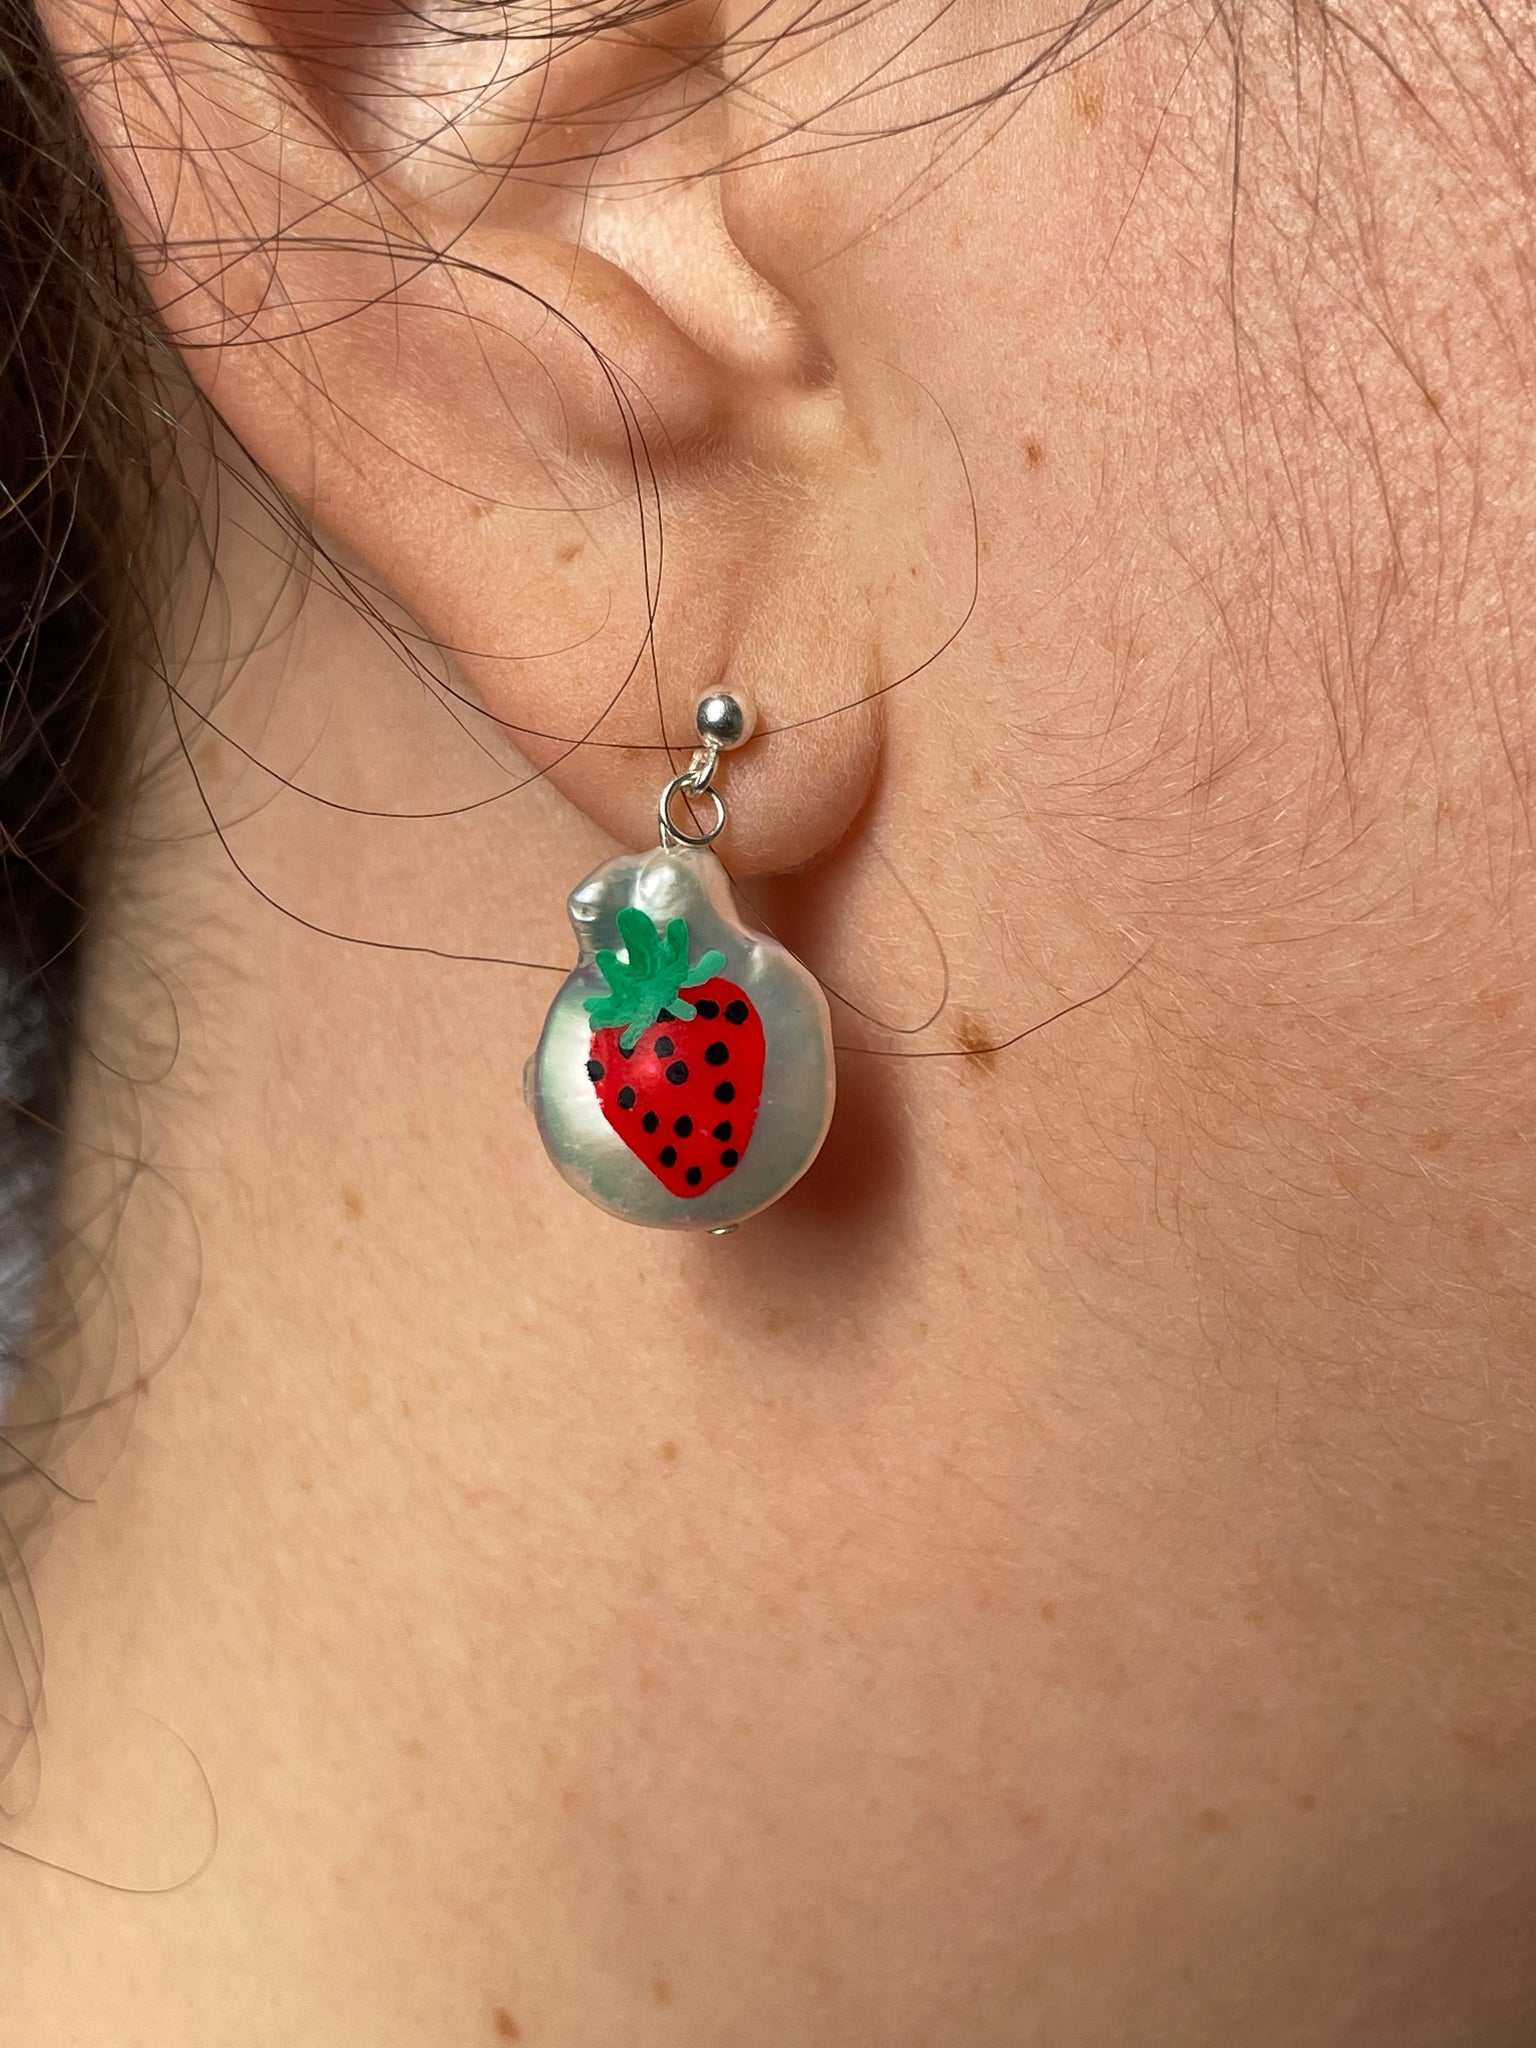 Brite* Things - Spotted Berry Earrings